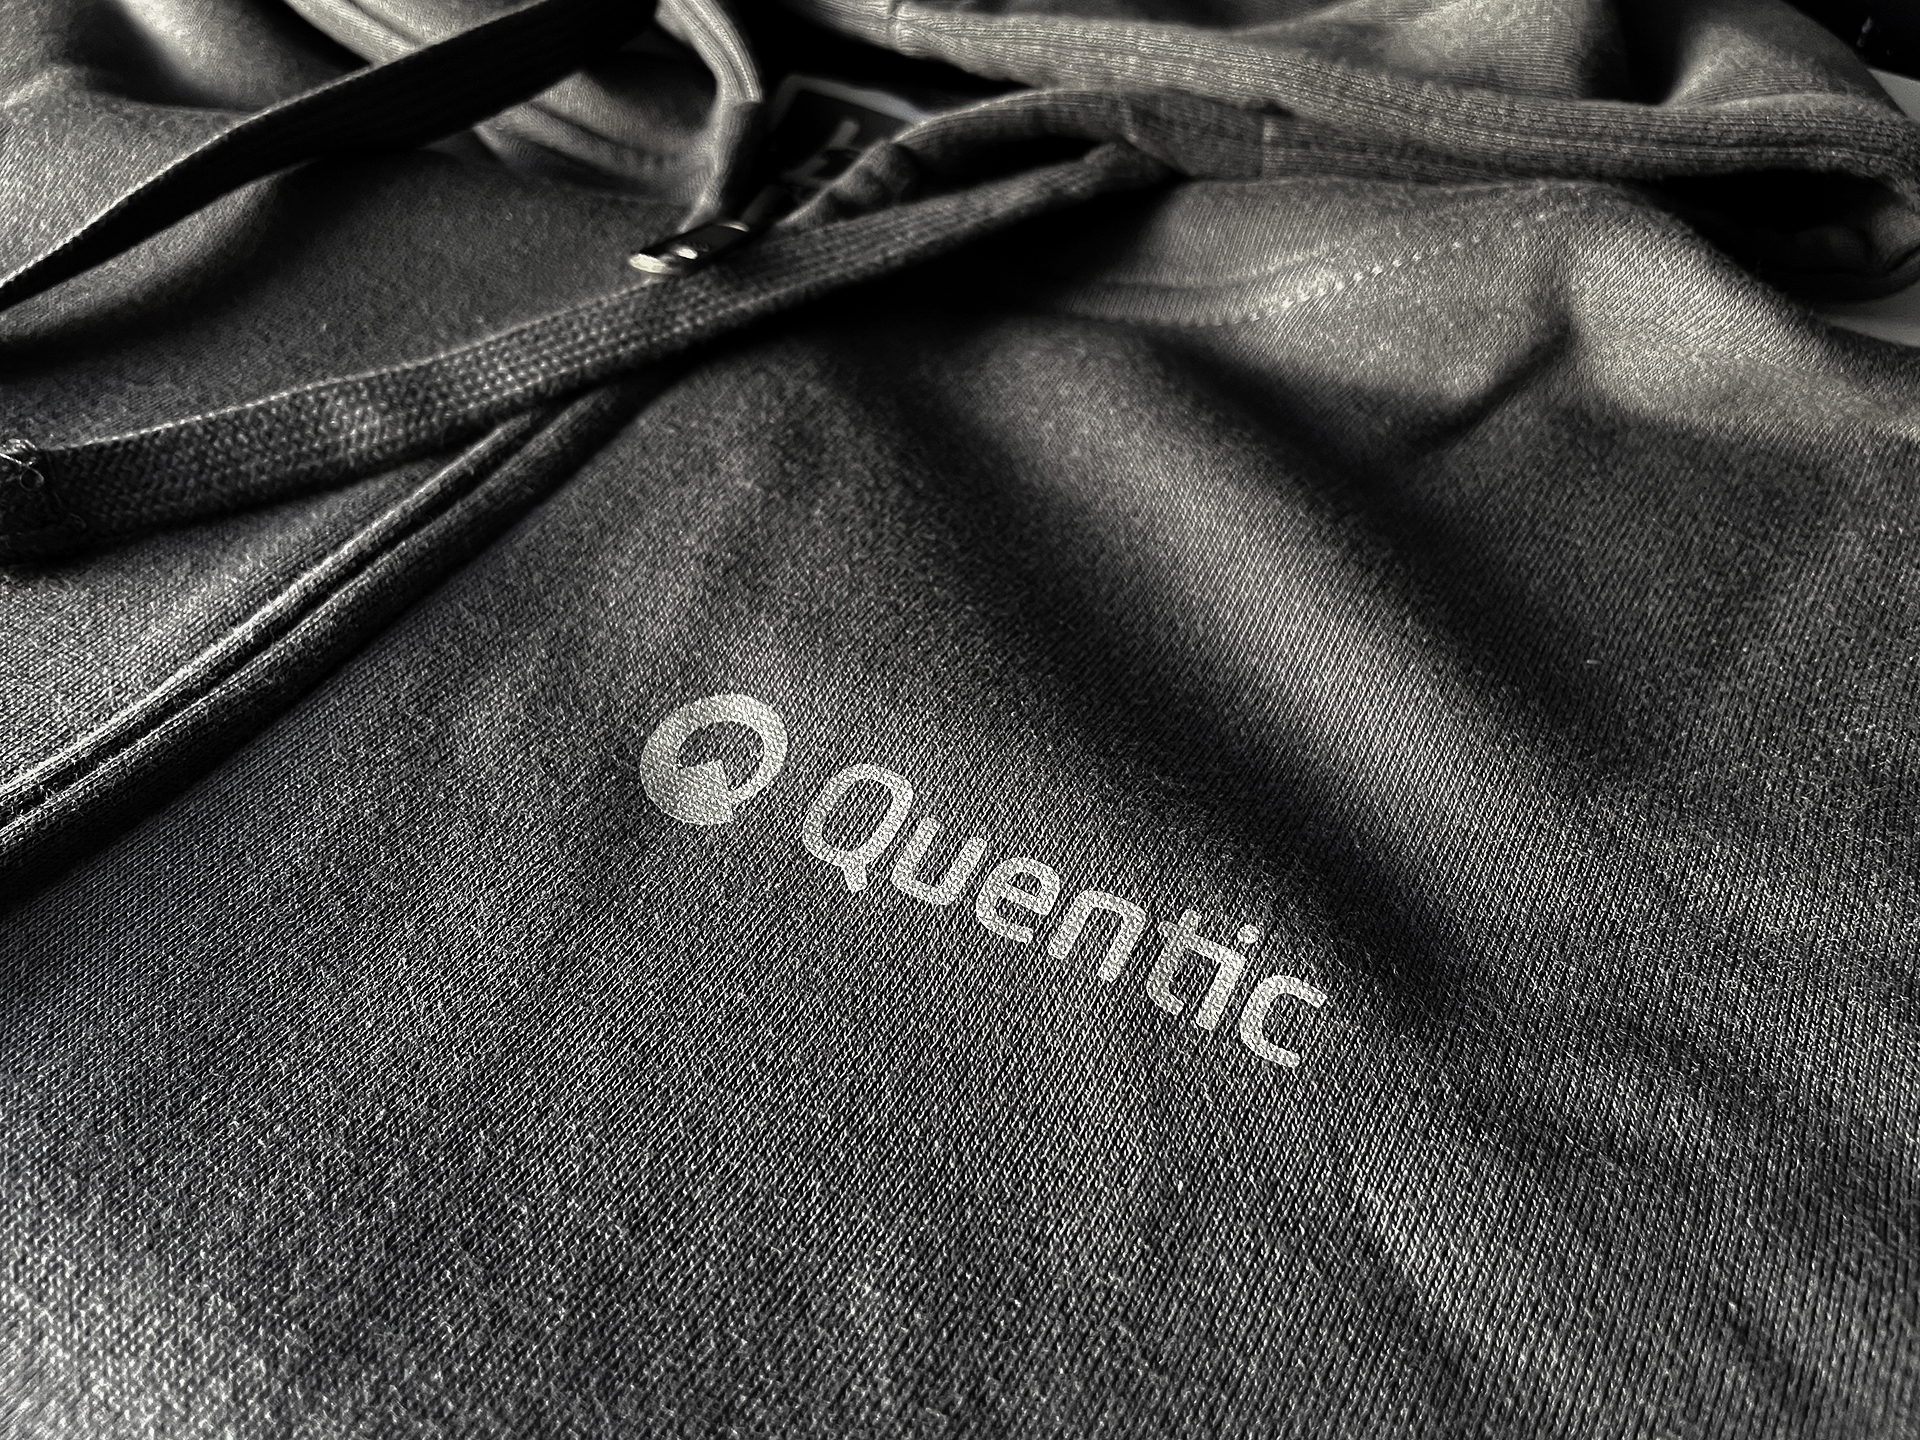 Quentic GmbH